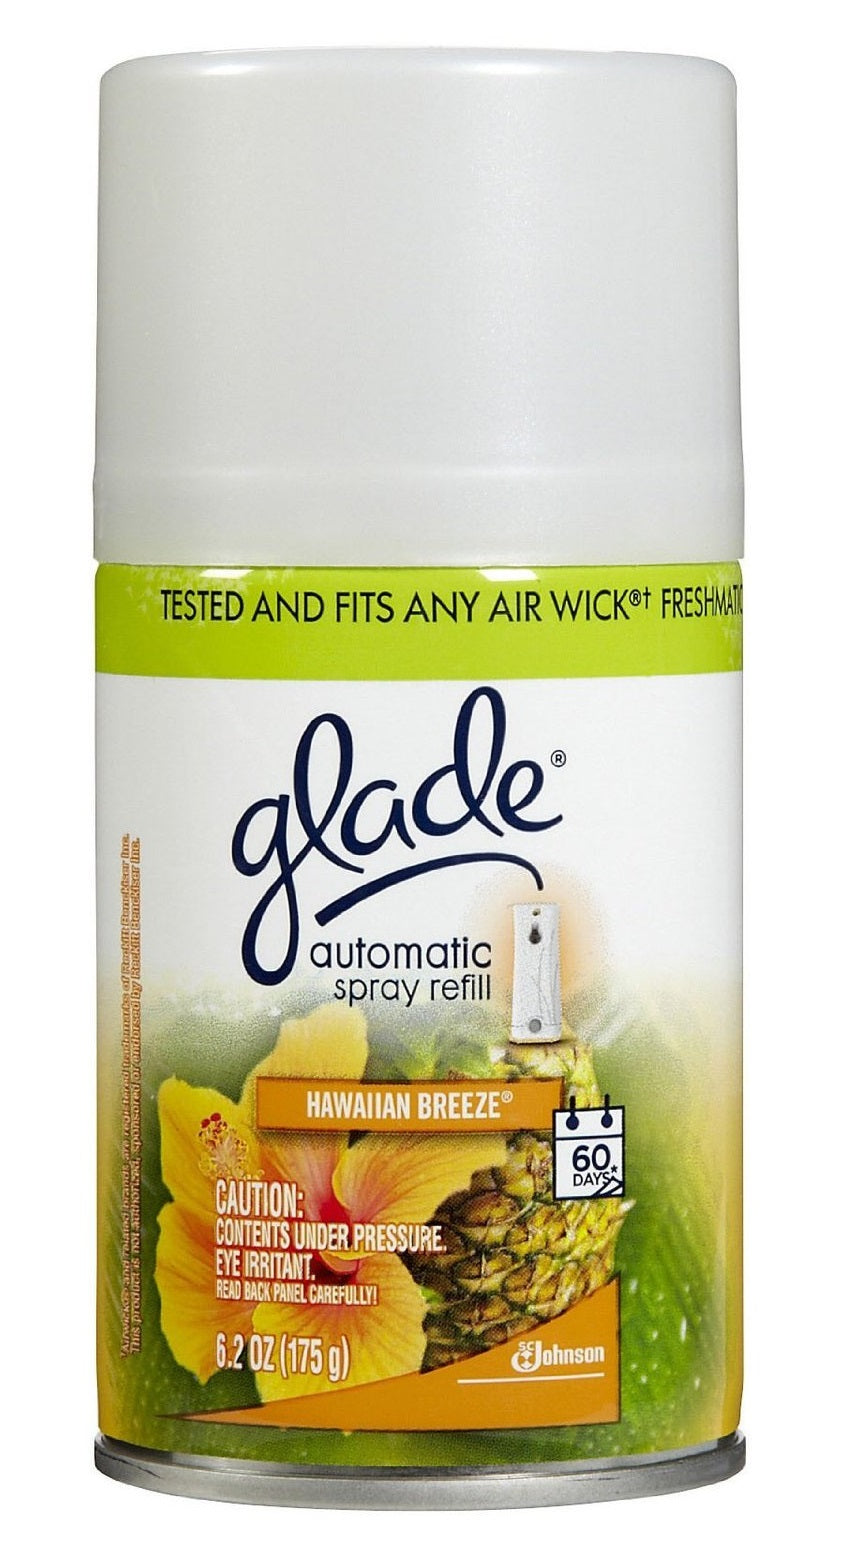 Glade 71777 Automatic Spray Refill, Hawaiian Breeze, 6.2 Oz.